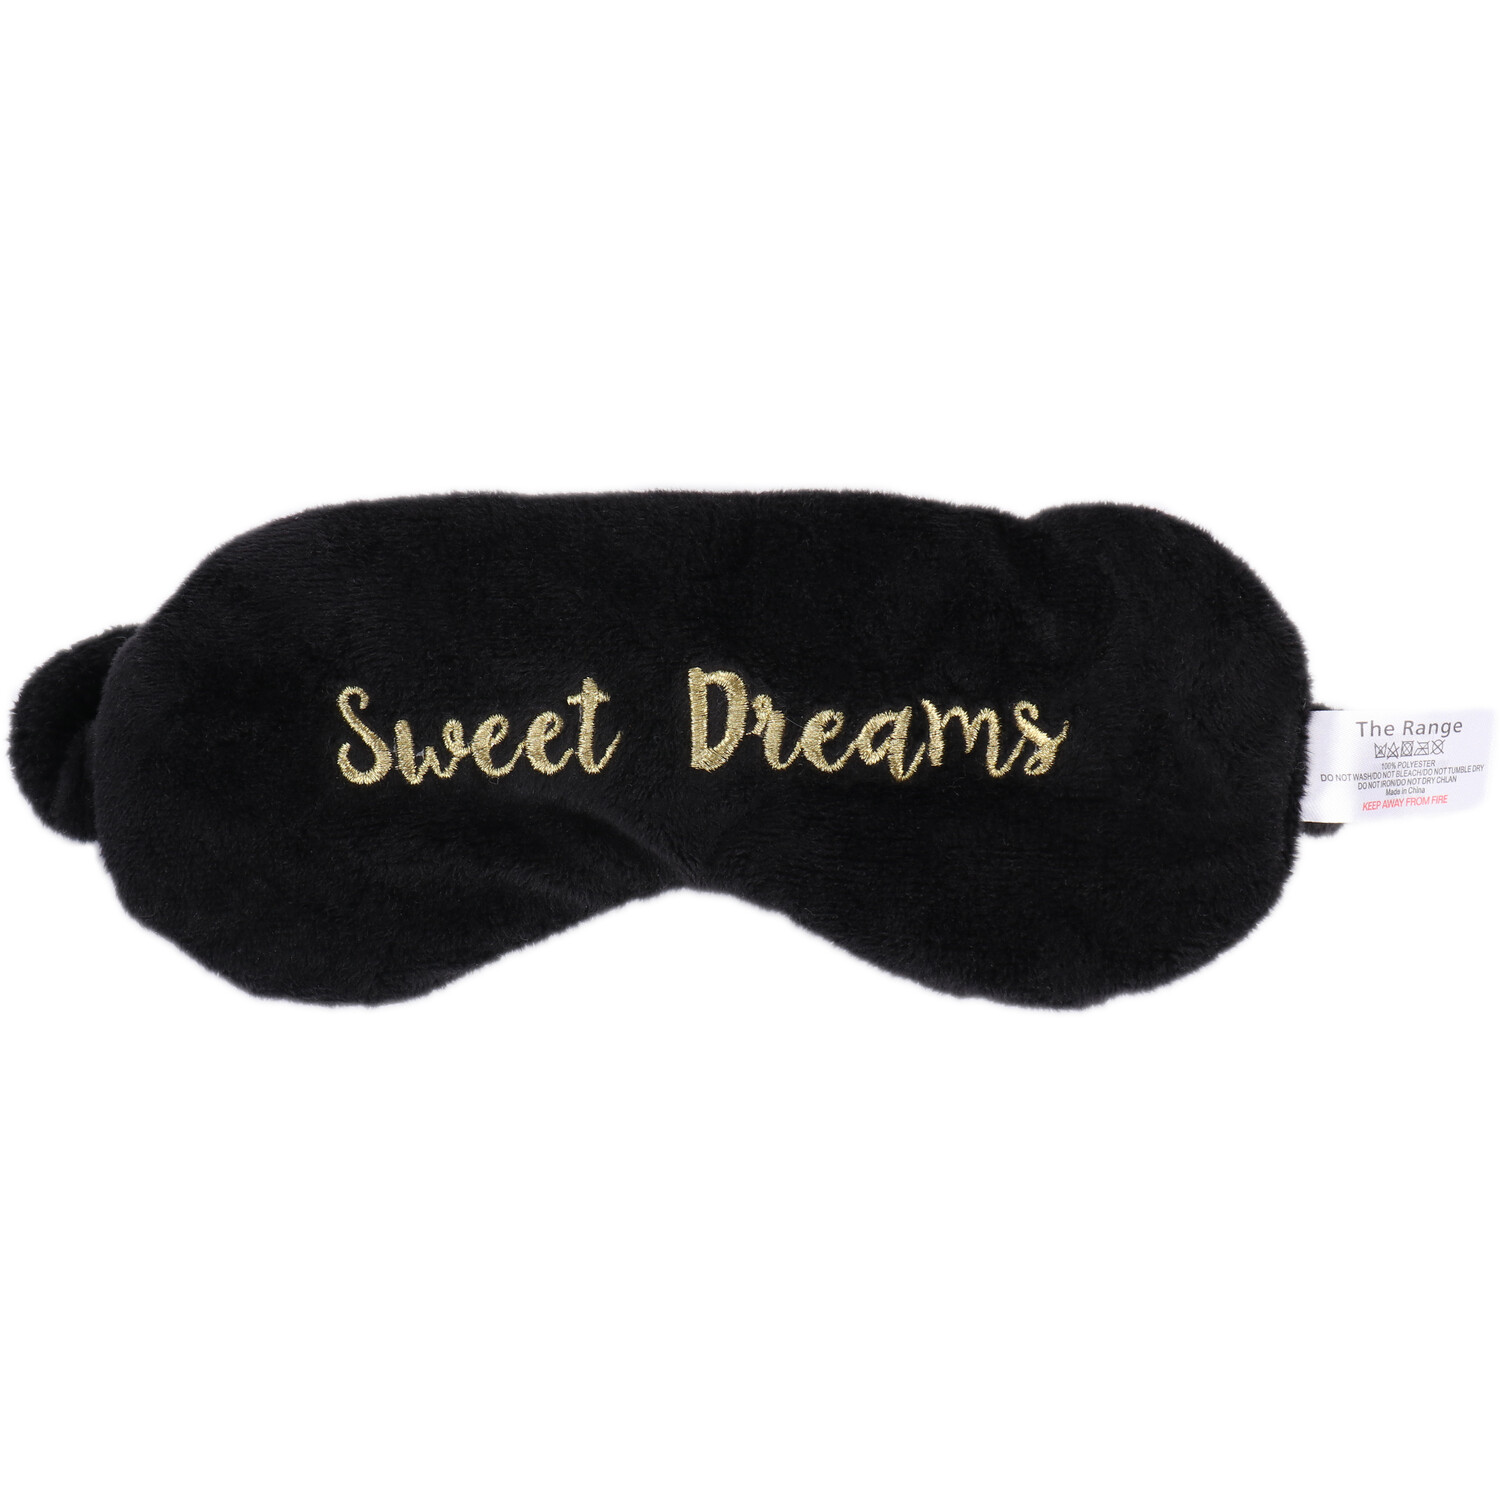 Sweet Dreams Eye Mask Image 1